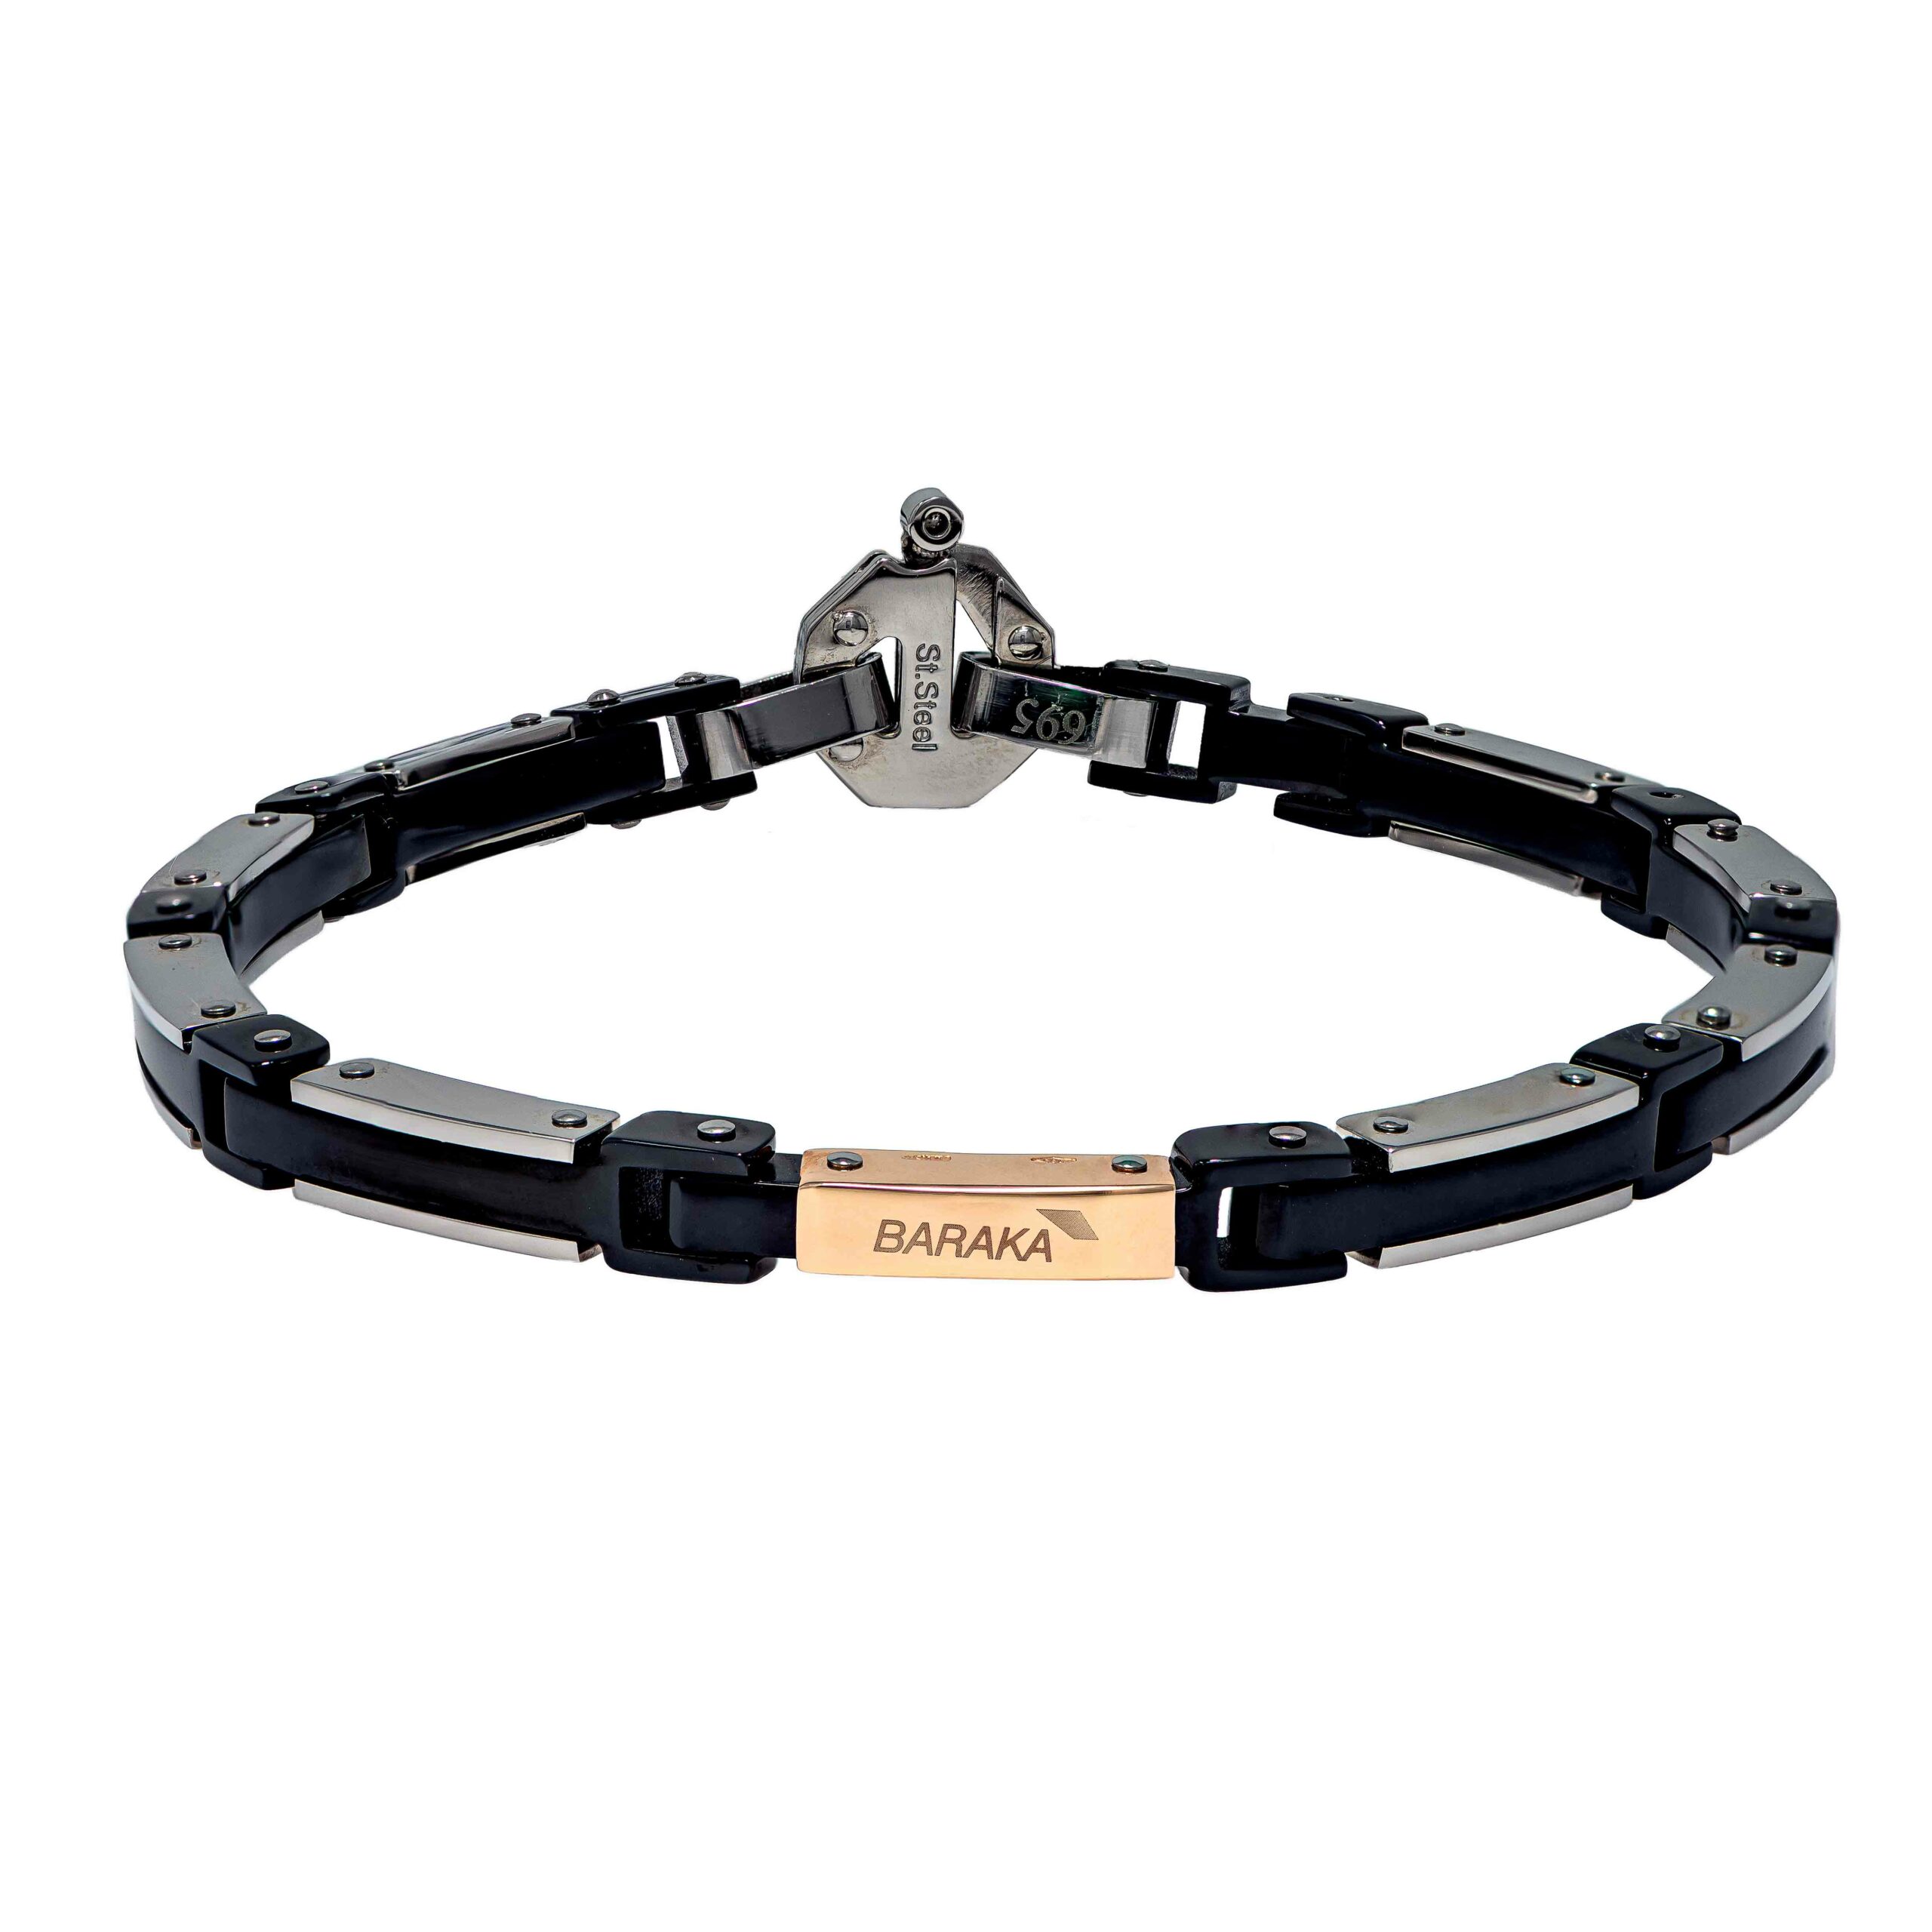 Baraka Explore Stainless Steel & Rose Gold Bracelet with Black PVD